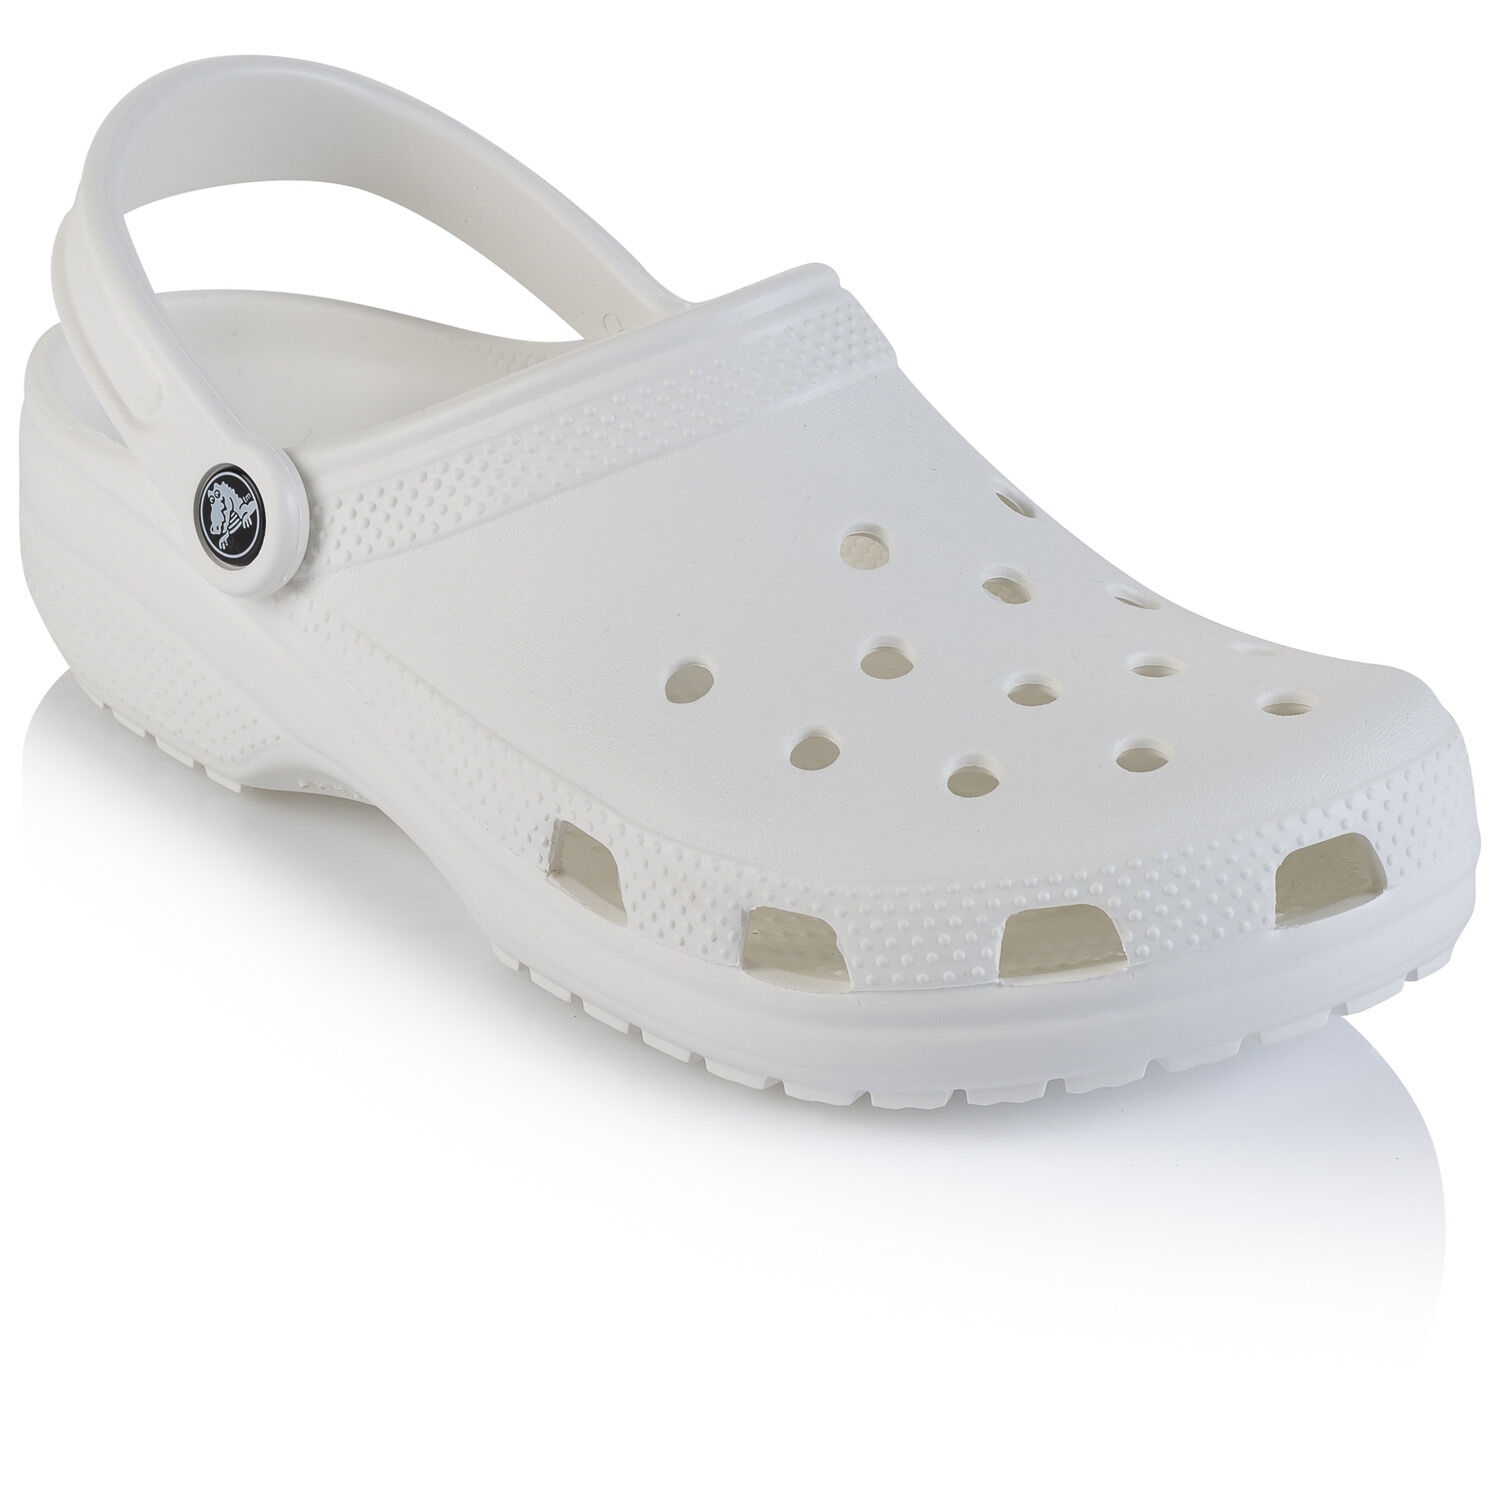 Crocs Shoes and Sandals 